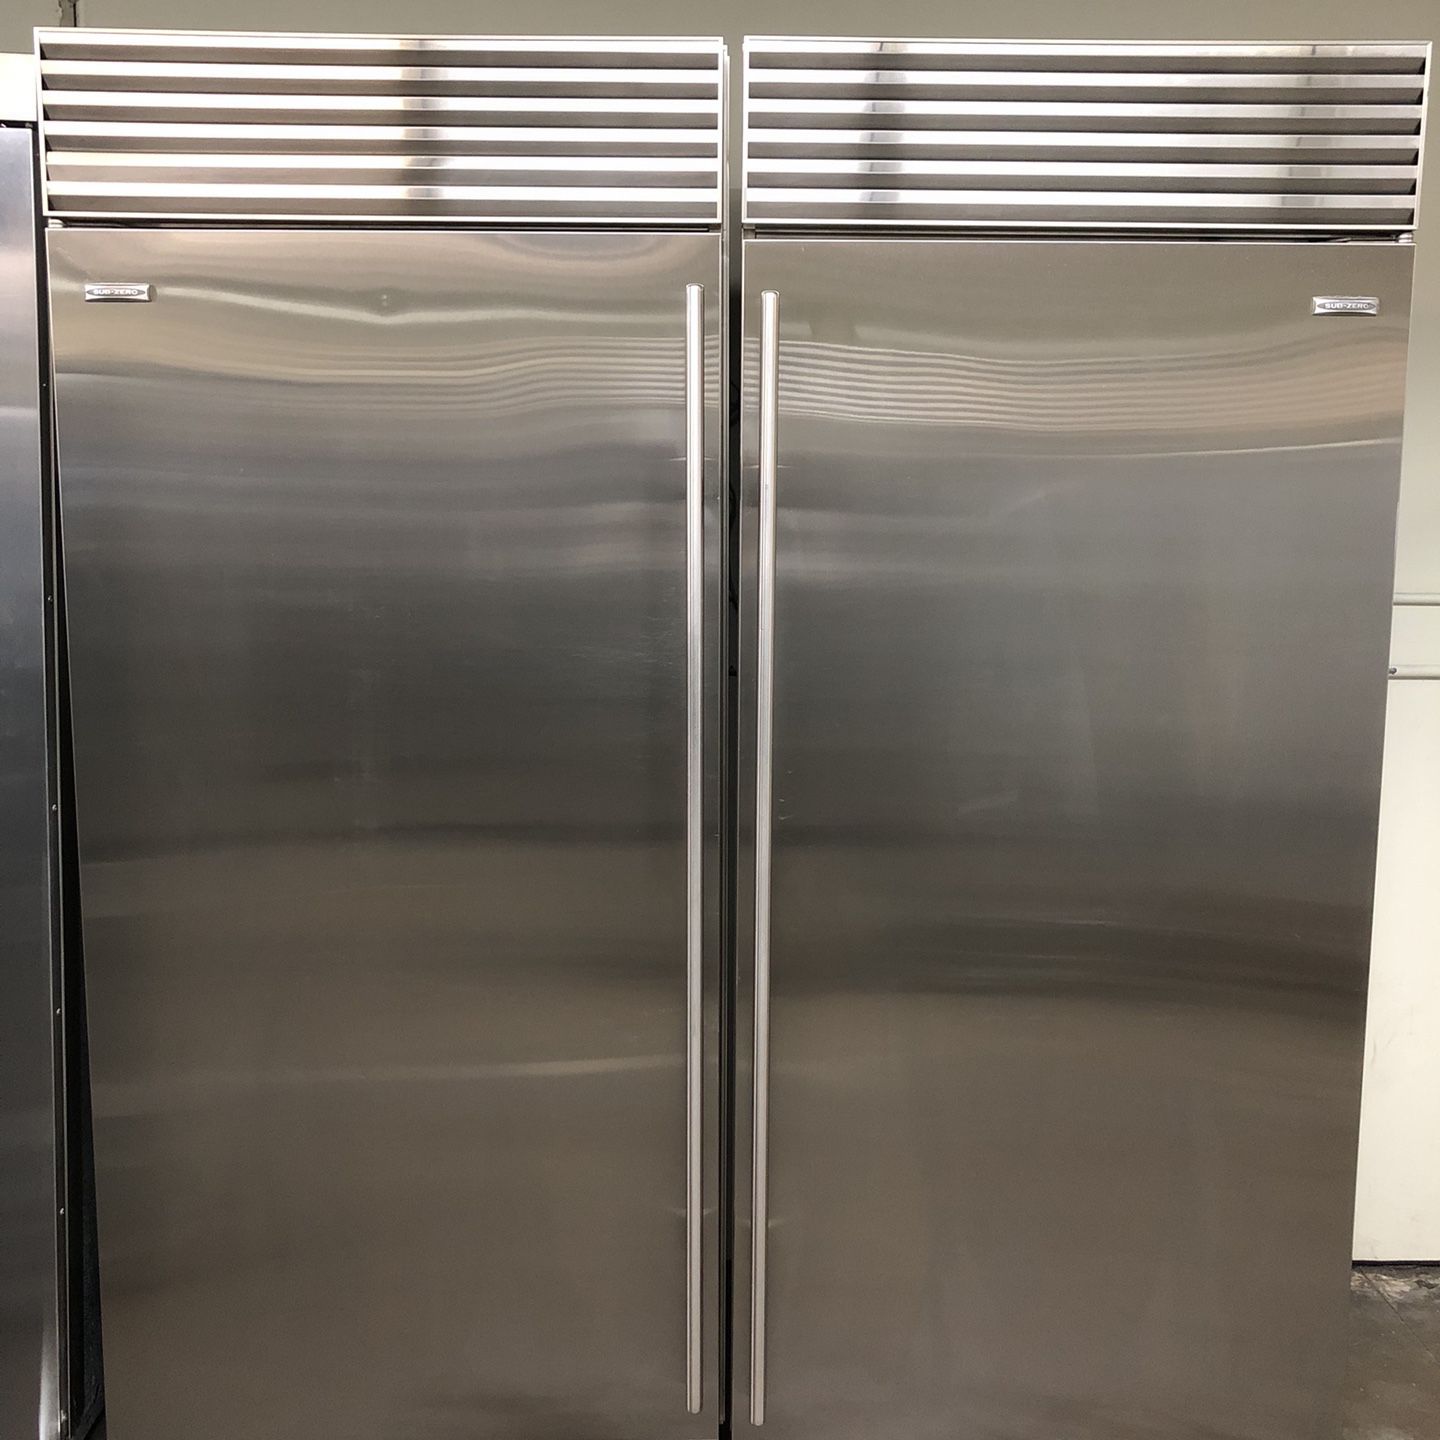 Sub Zero 72” All Refrigerator Side By Side Built In Refrigerator Set 